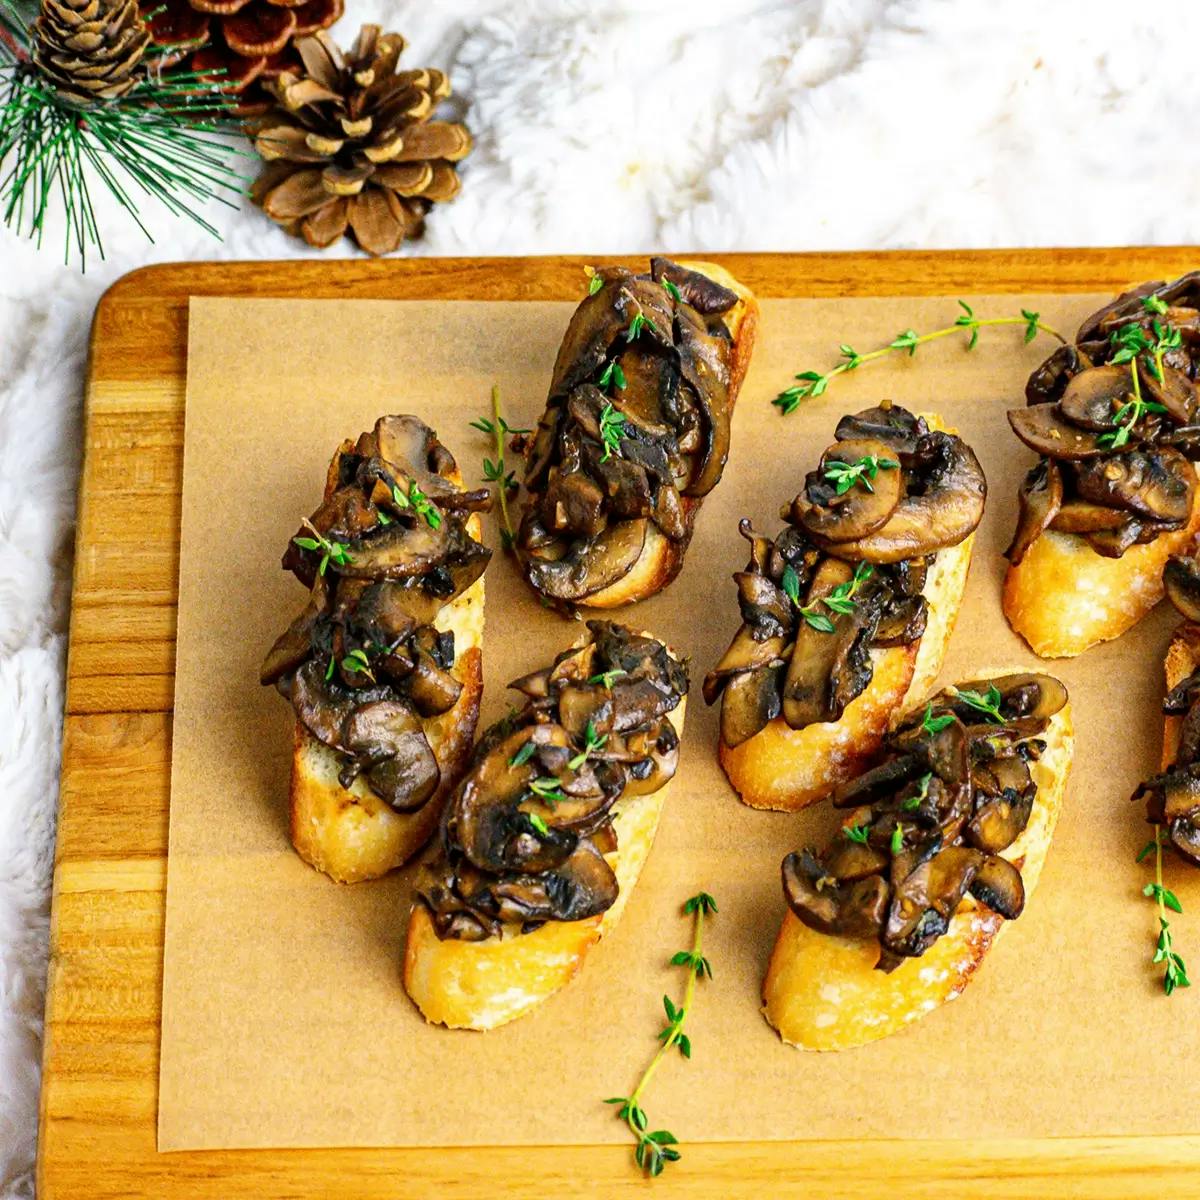 Caramelized mushrooms on gluten-free toast holiday appetizer.